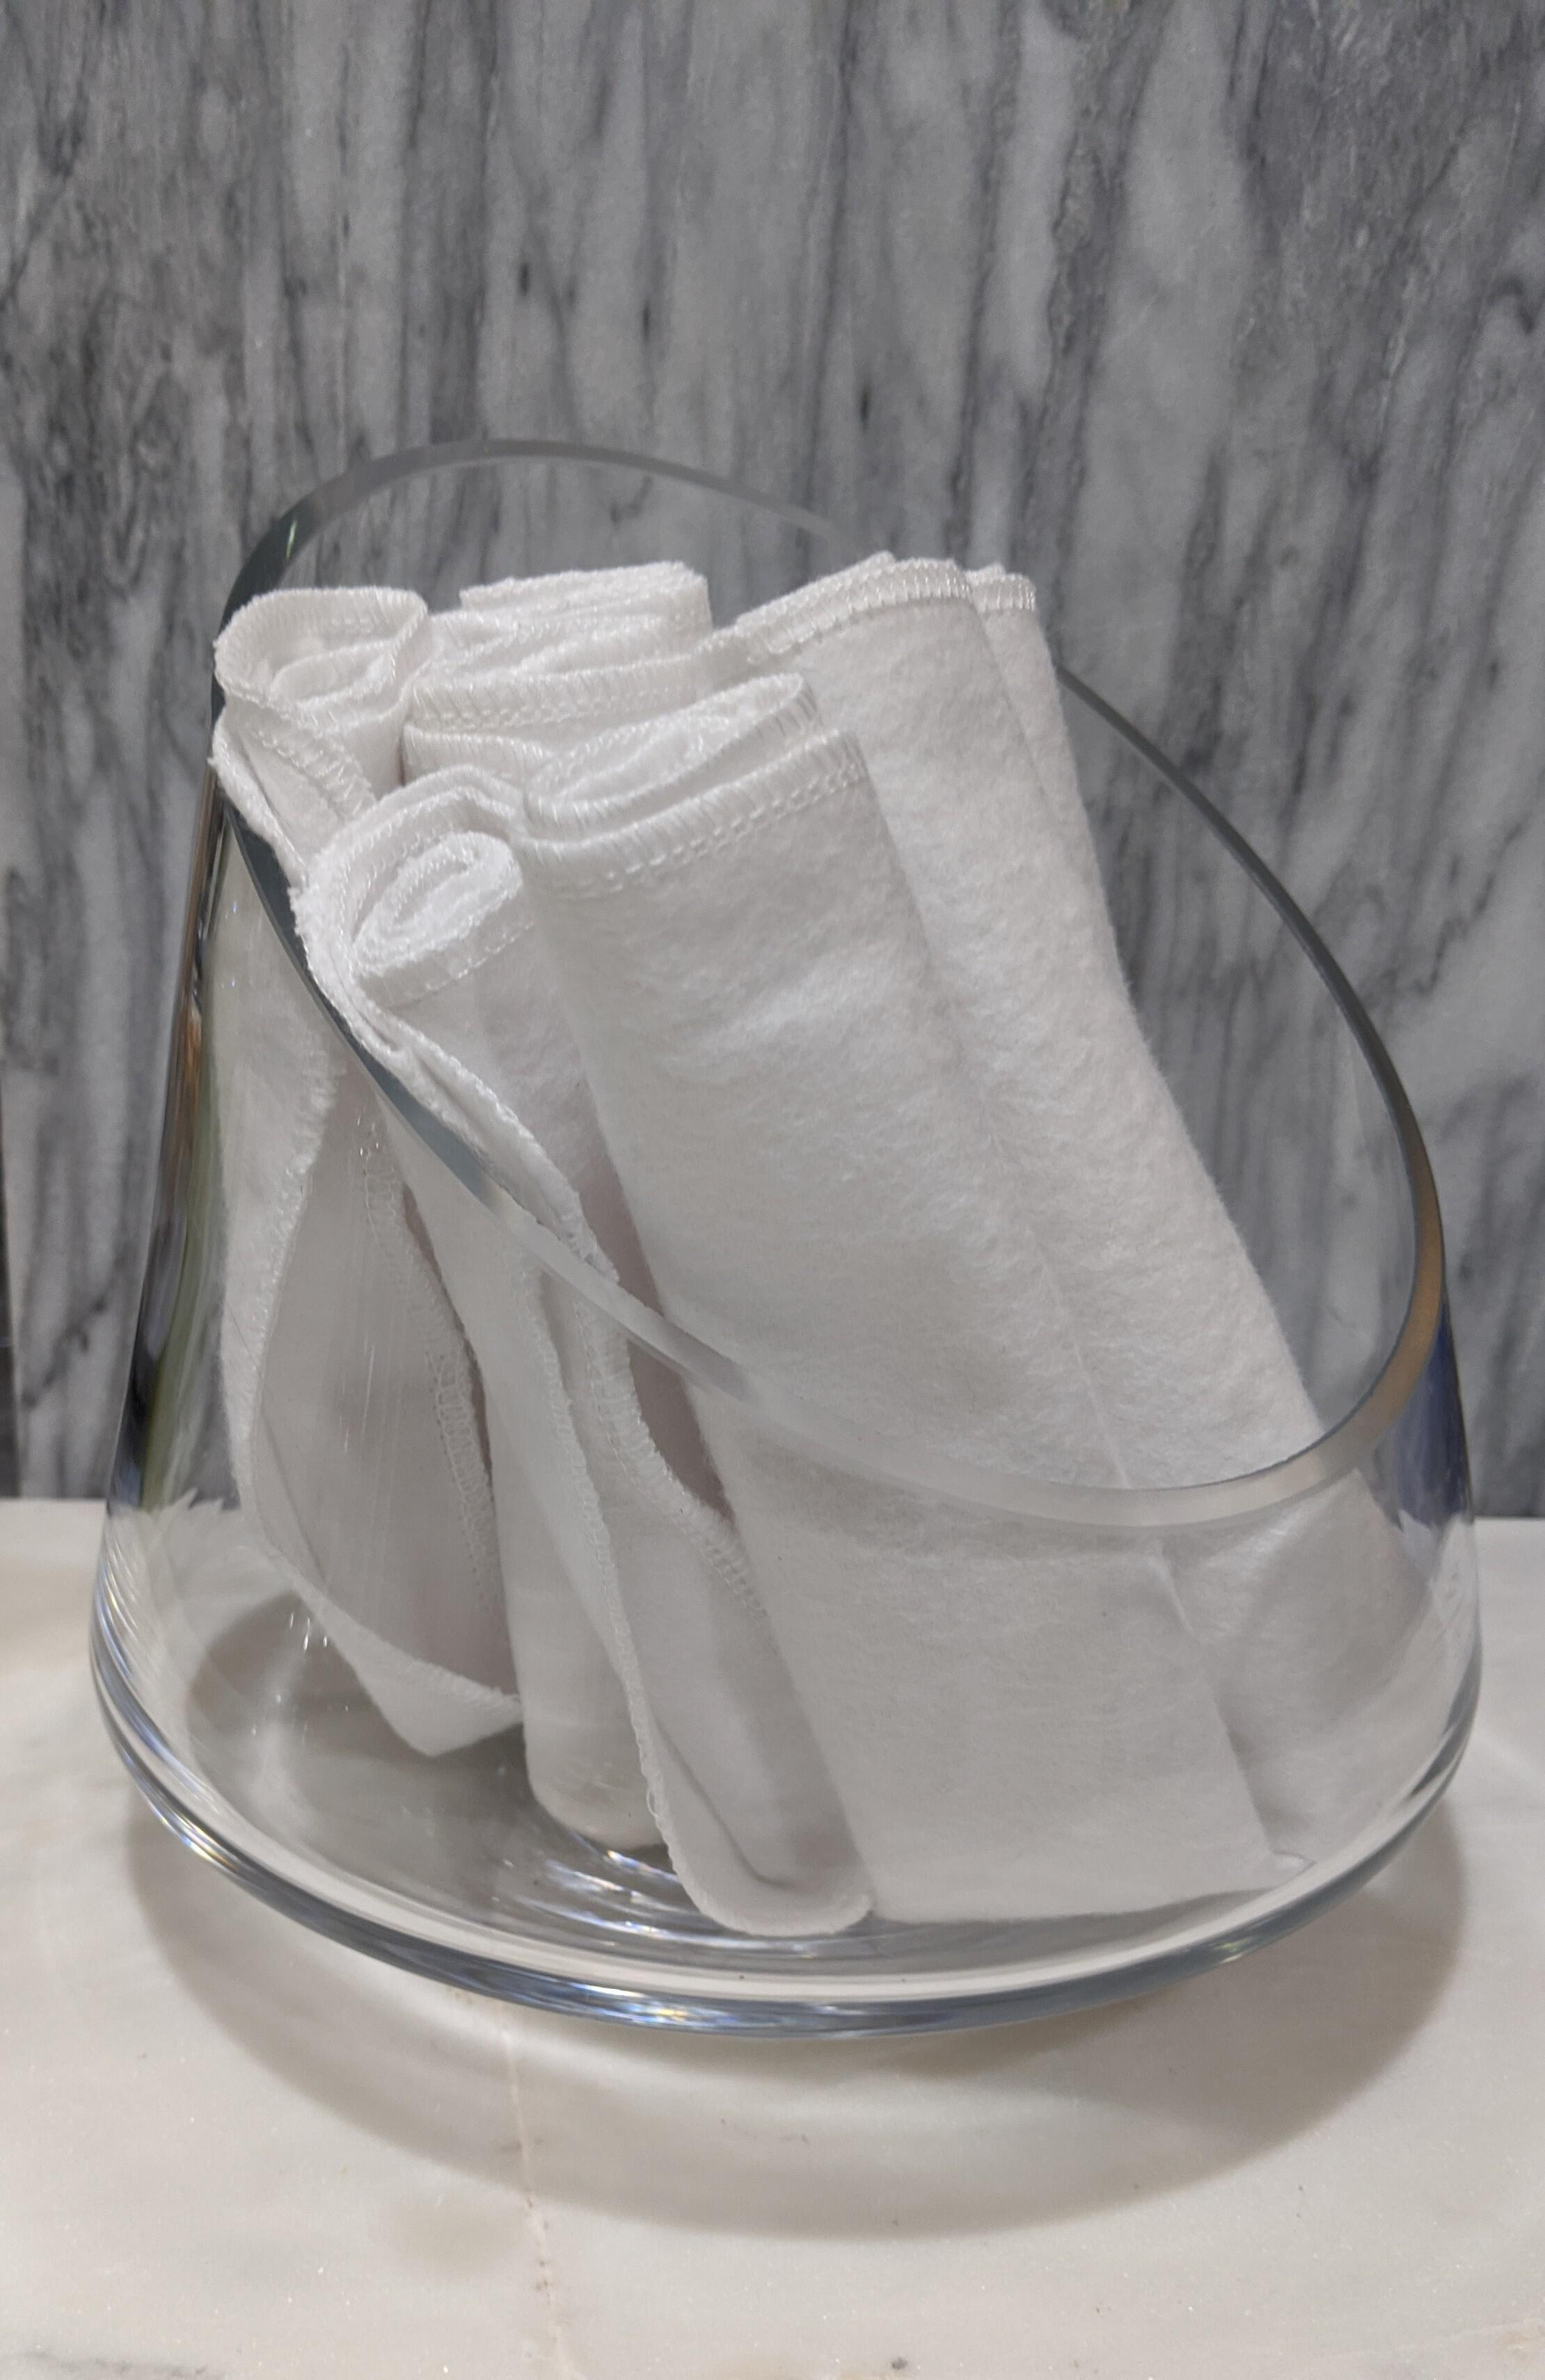 Unpaper towels, white